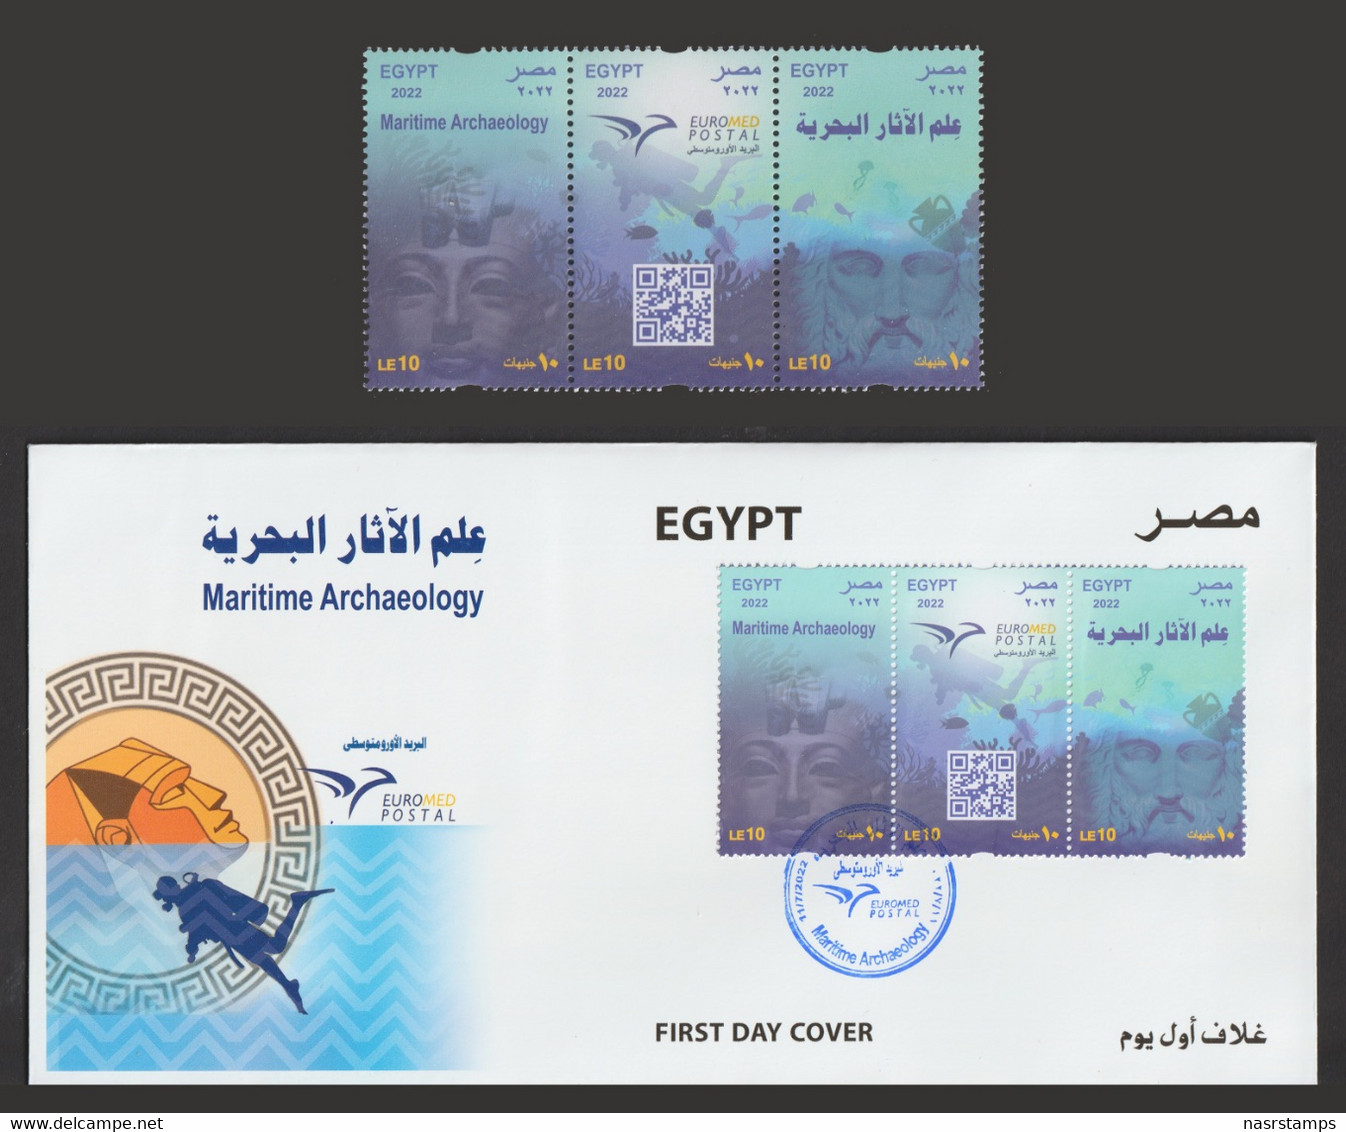 Egypt - 2022 - FDC - ( EUROMED Postal - Maritime Archaeology ) - MNH** - Egyptology